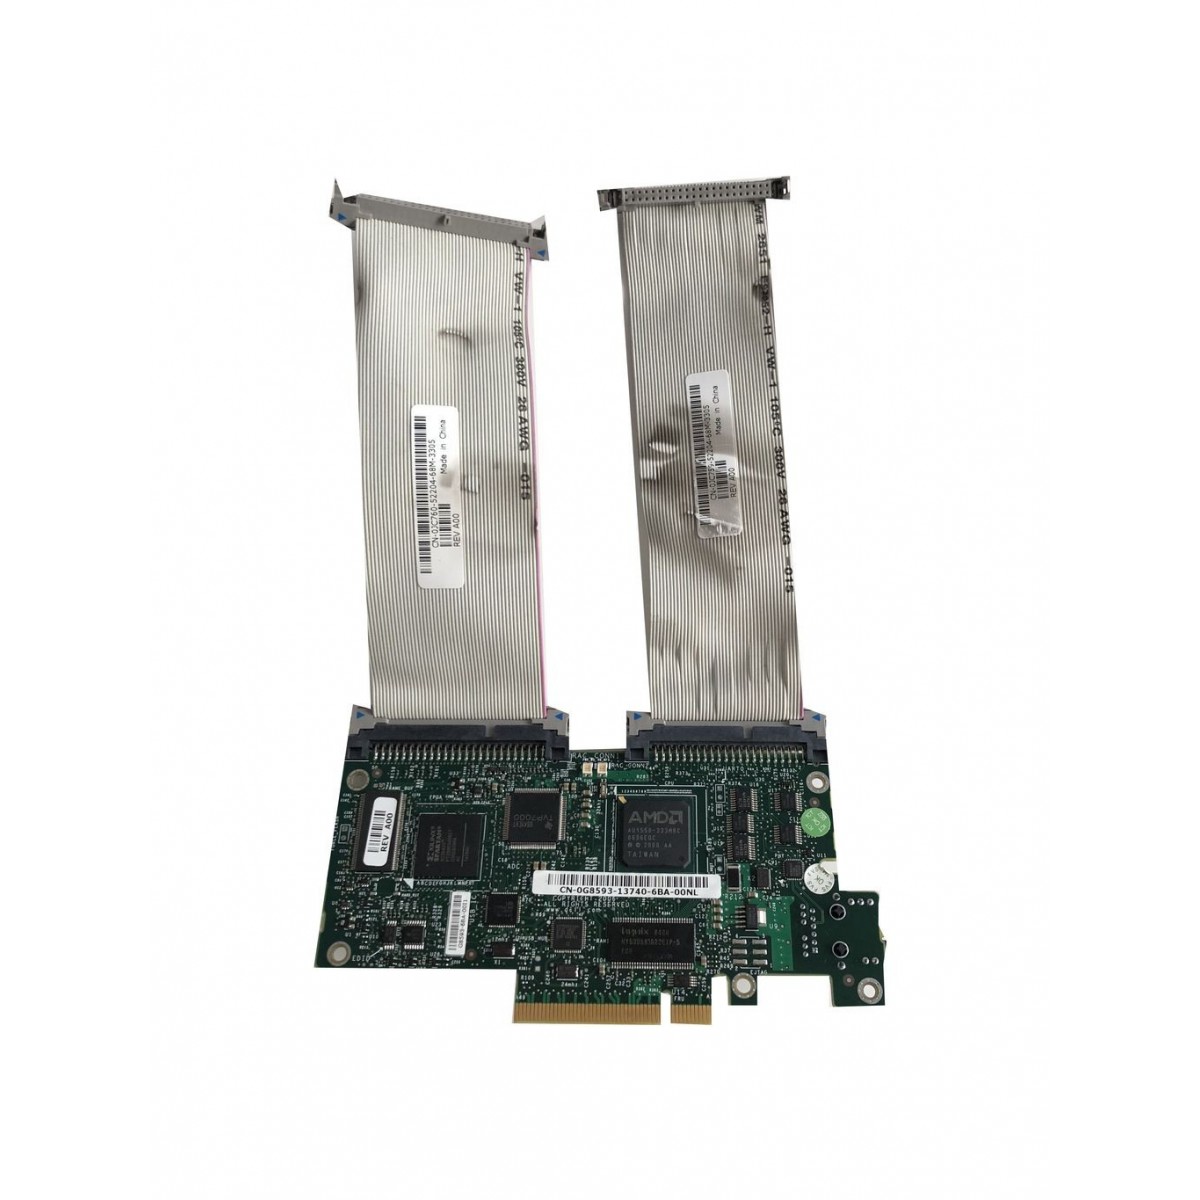 KARTA DELL DRAC 5 PCIe REMOTE ACCESS CARD 0G8593